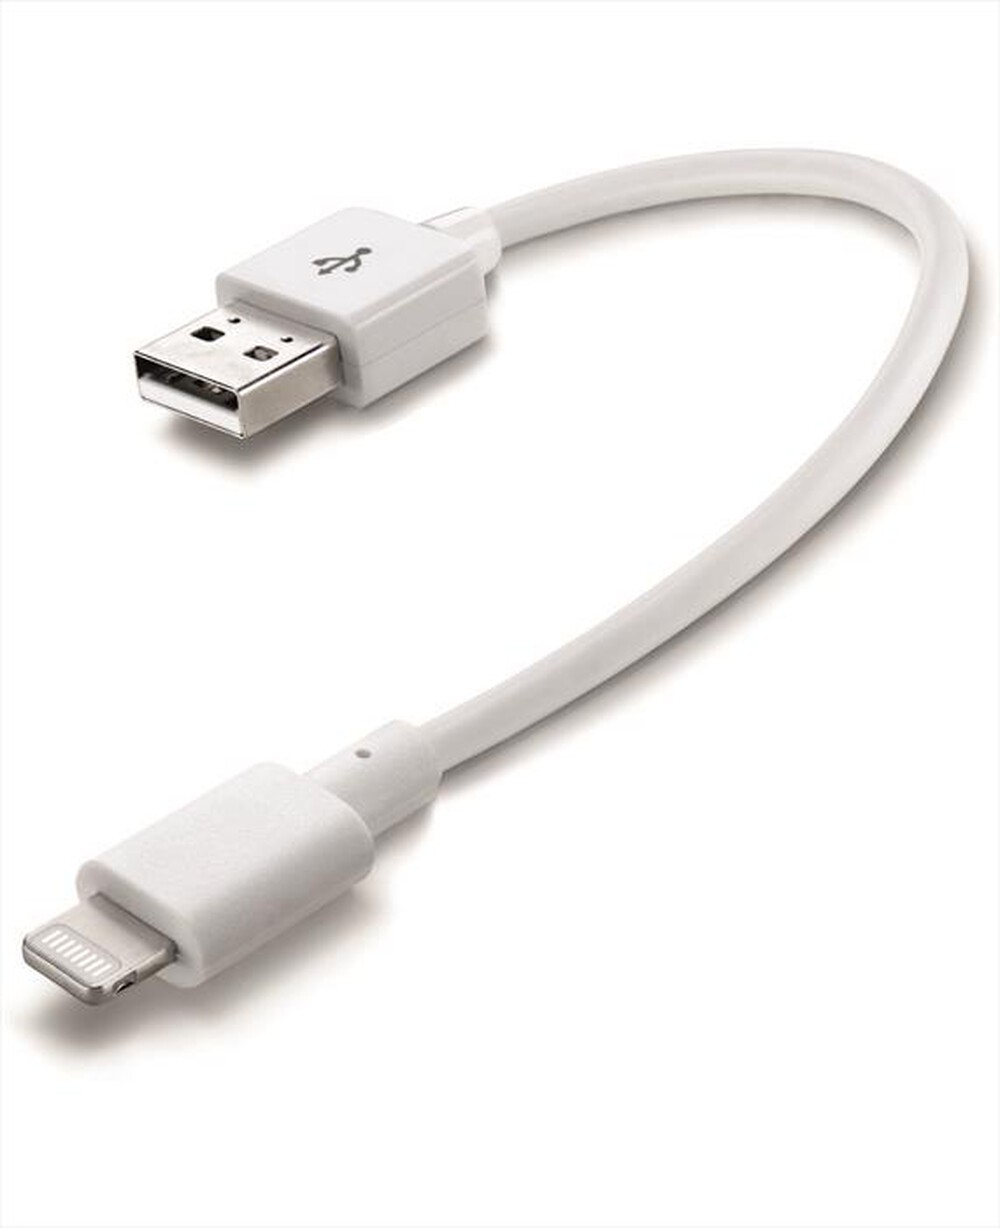 "CELLULARLINE - USB Data Cable Portable - Lightning-Bianco"